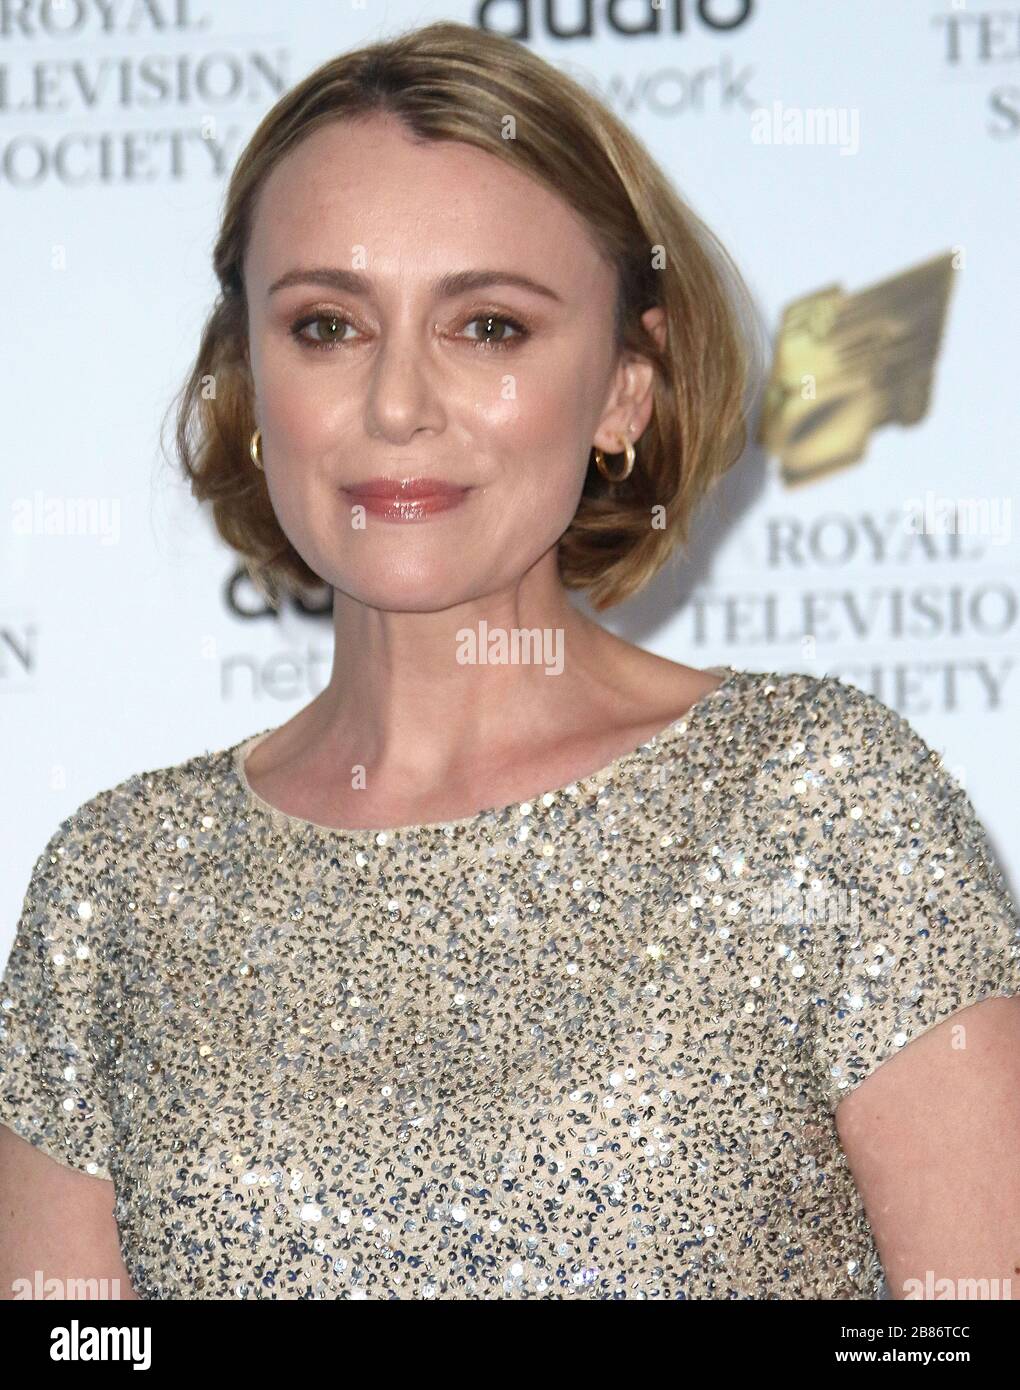 Mar 21, 2017 - London, England, UK - Royal Television Society Awards 2017     Photo Shows: Keeley Hawes Stock Photo